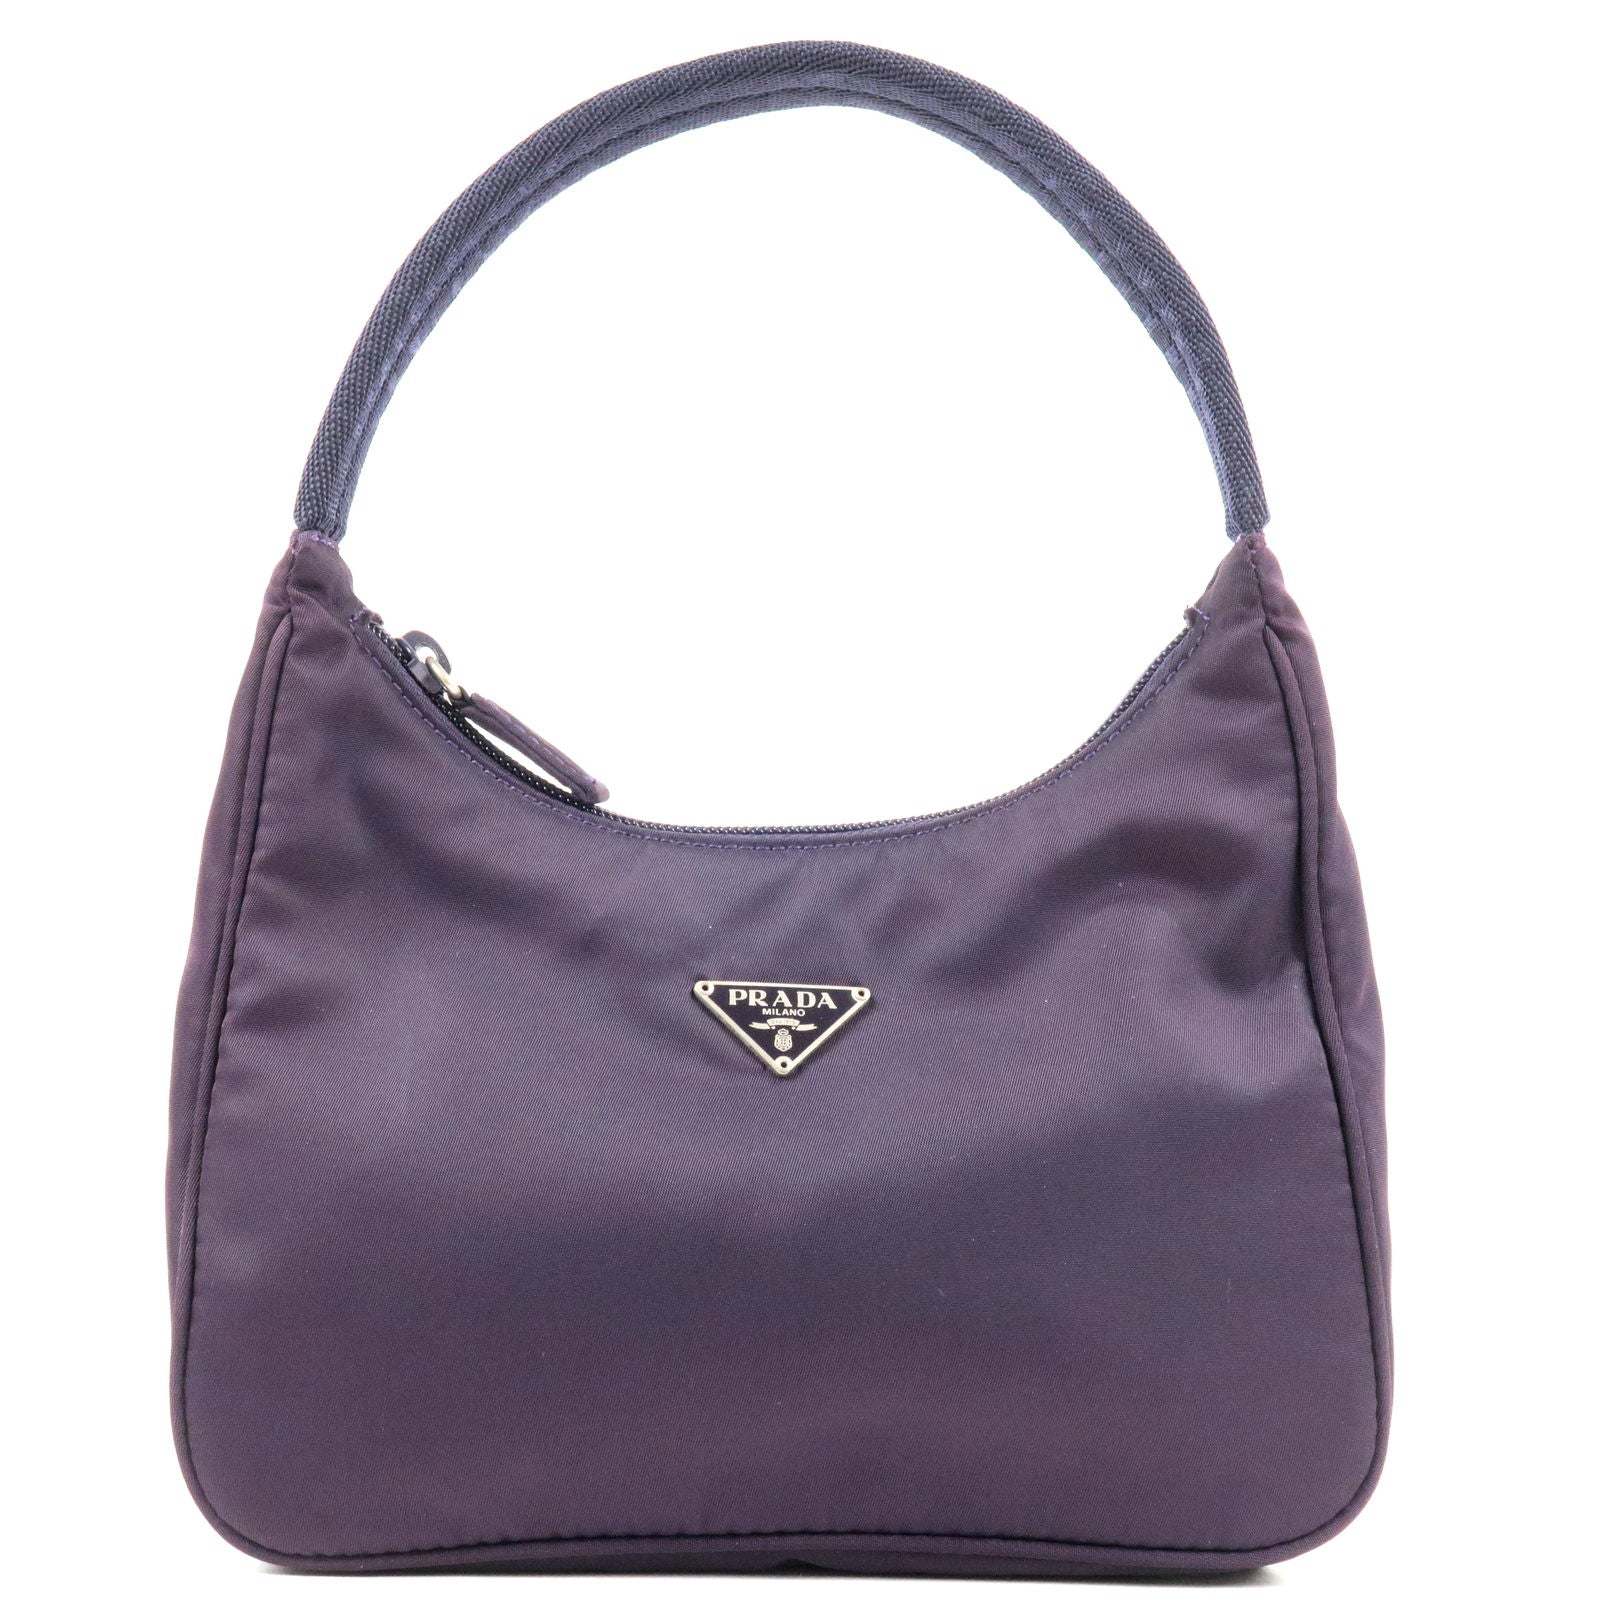 Prada purse dupe 😍💕 #smallbusiness #purse #aesthetic #purple  #latinaownedbusiness #baddie | Instagram